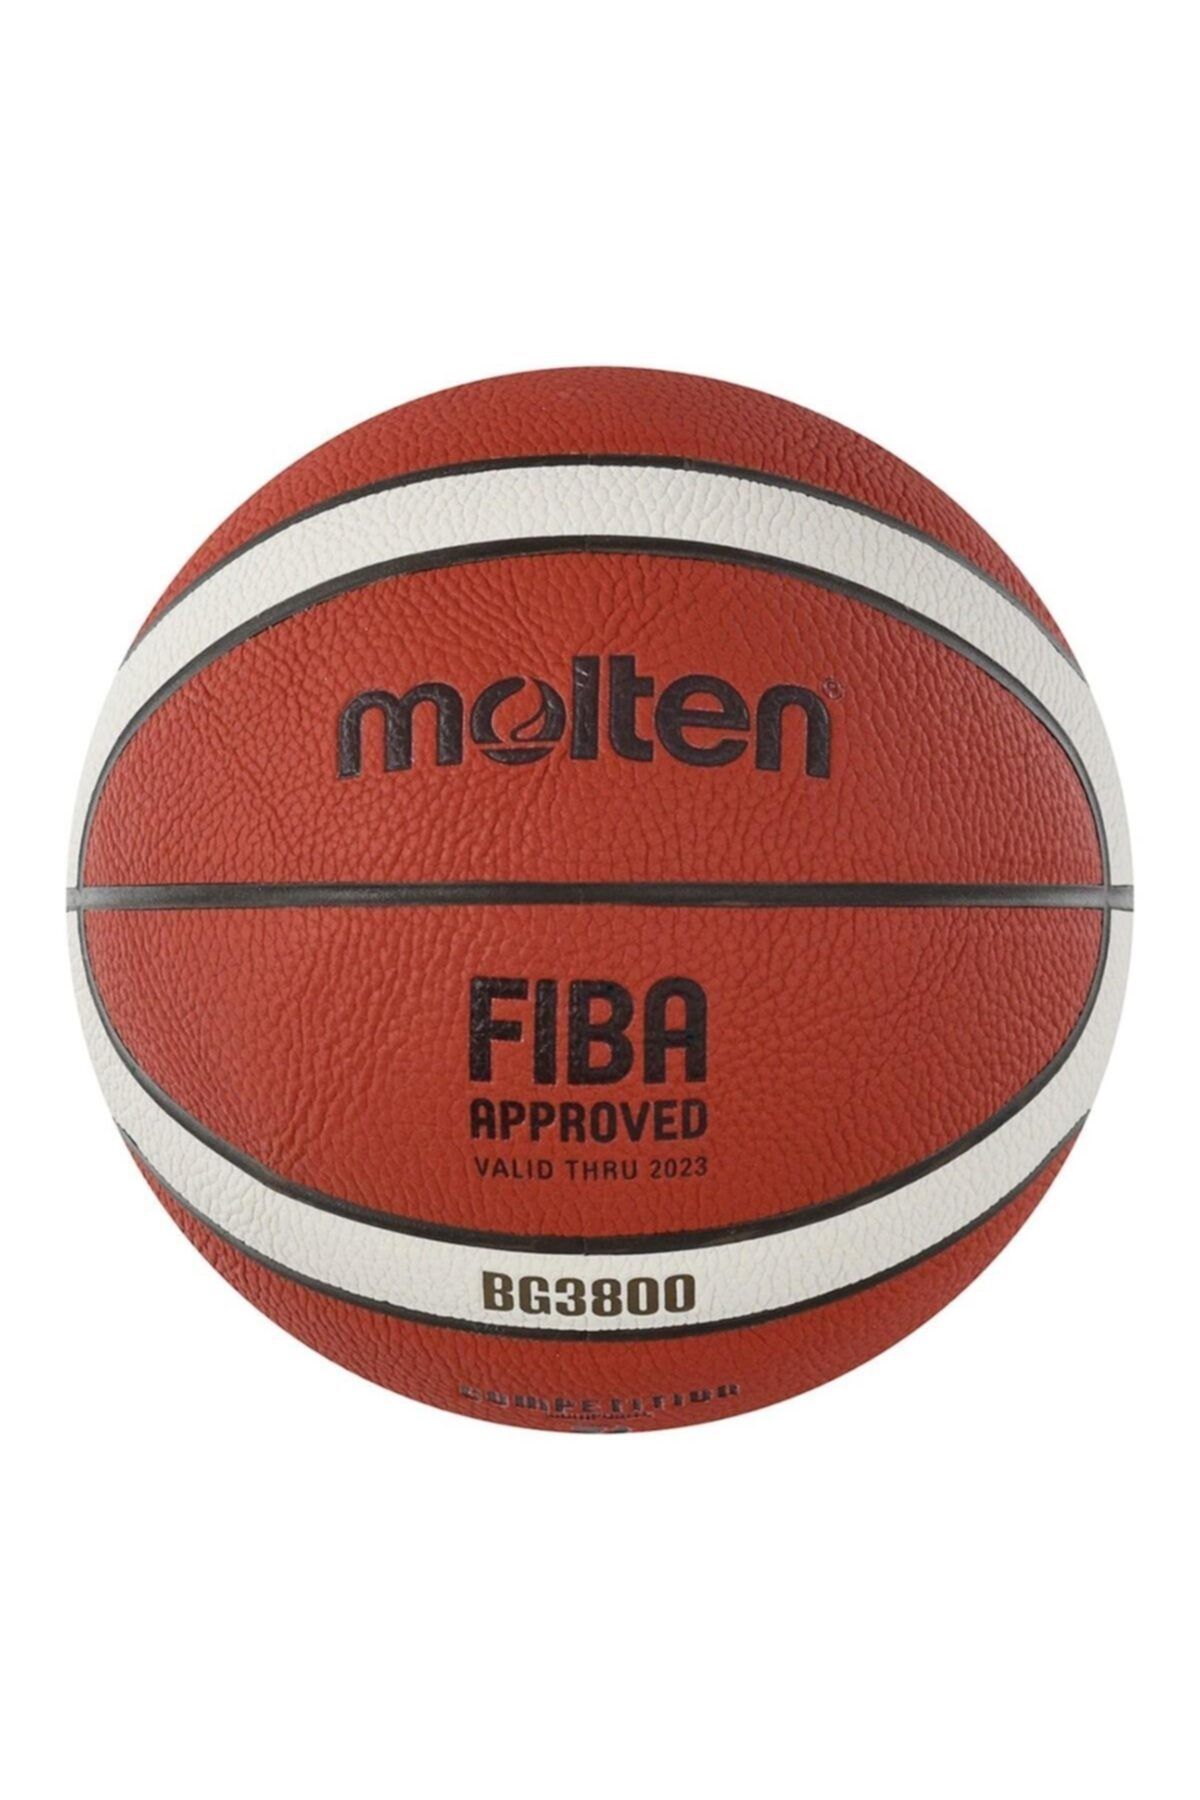 Molten B7g3800 Basketbol Topu